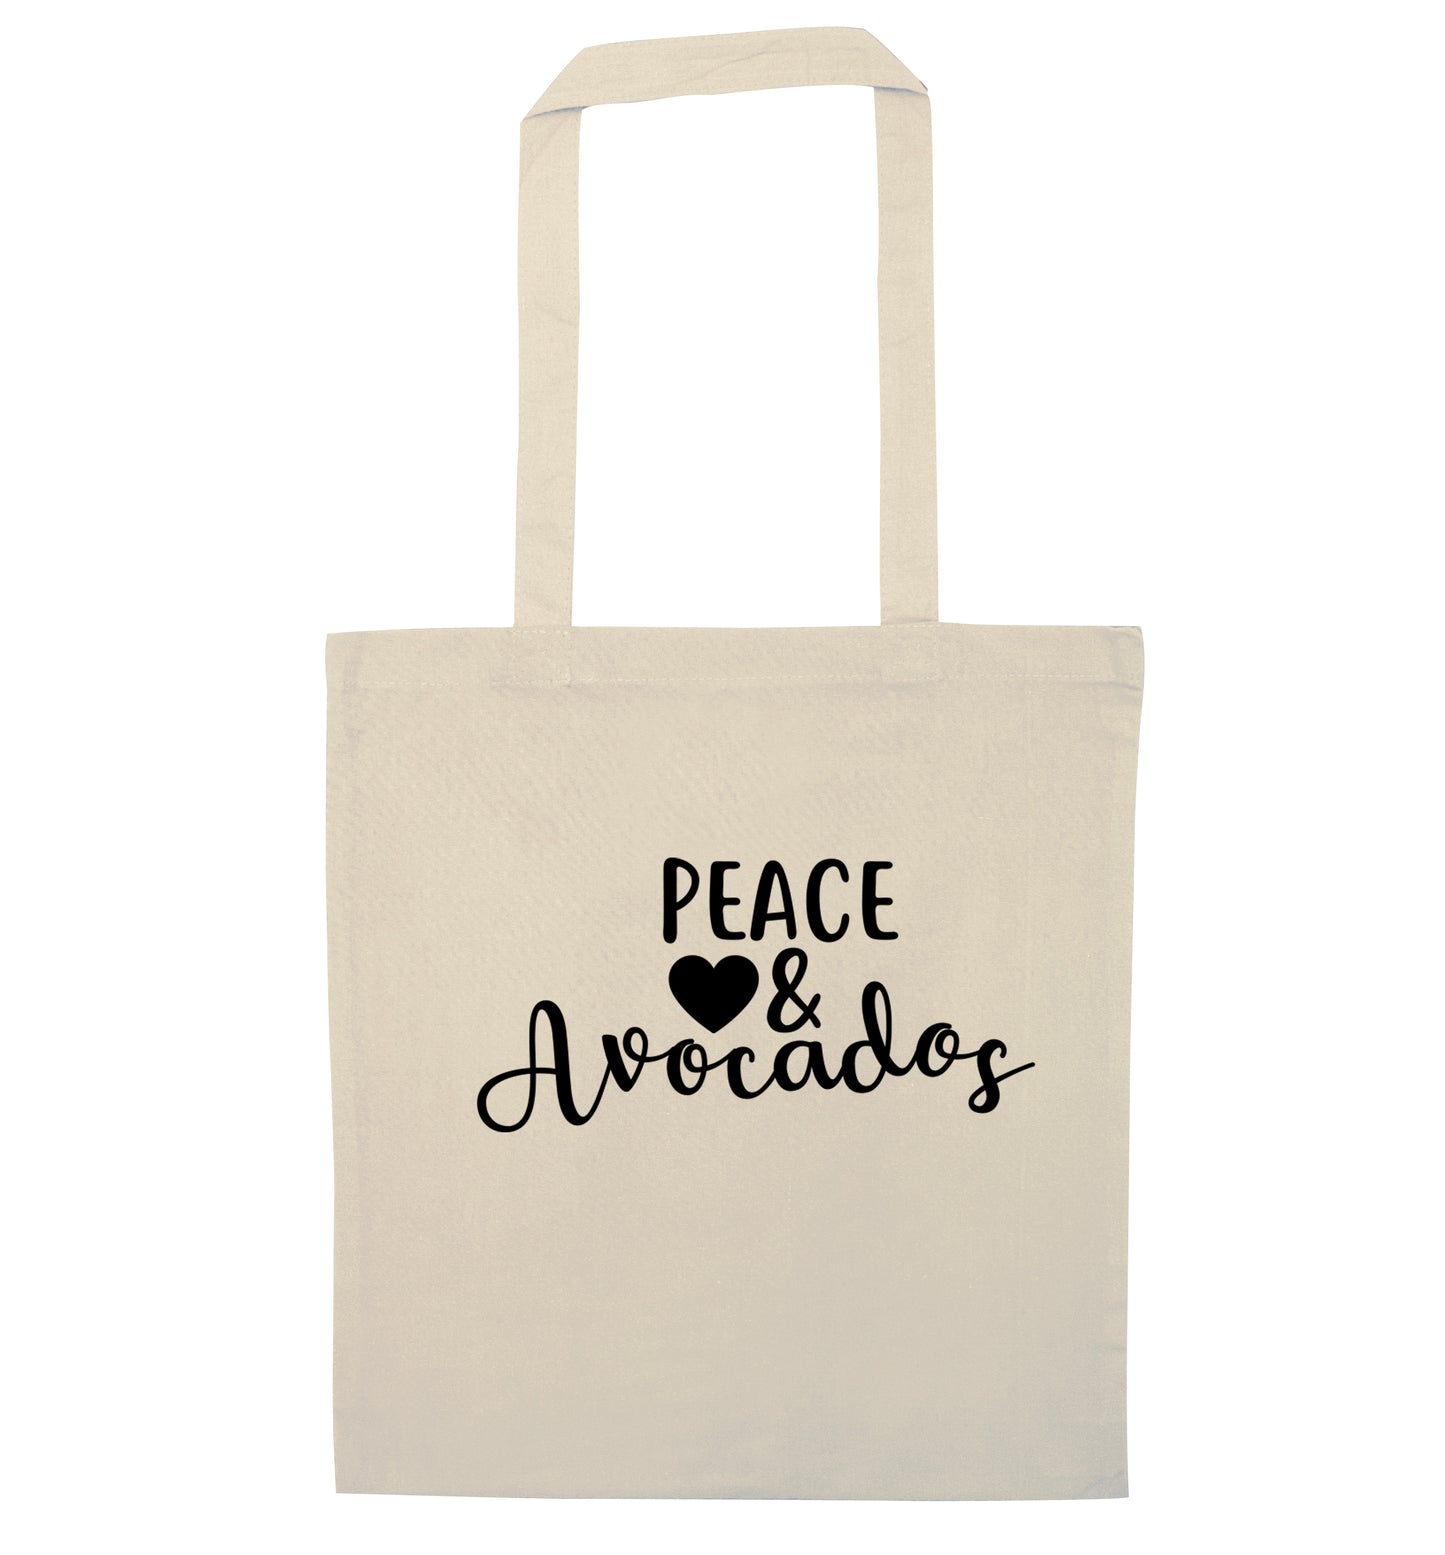 Peace love and avocados natural tote bag